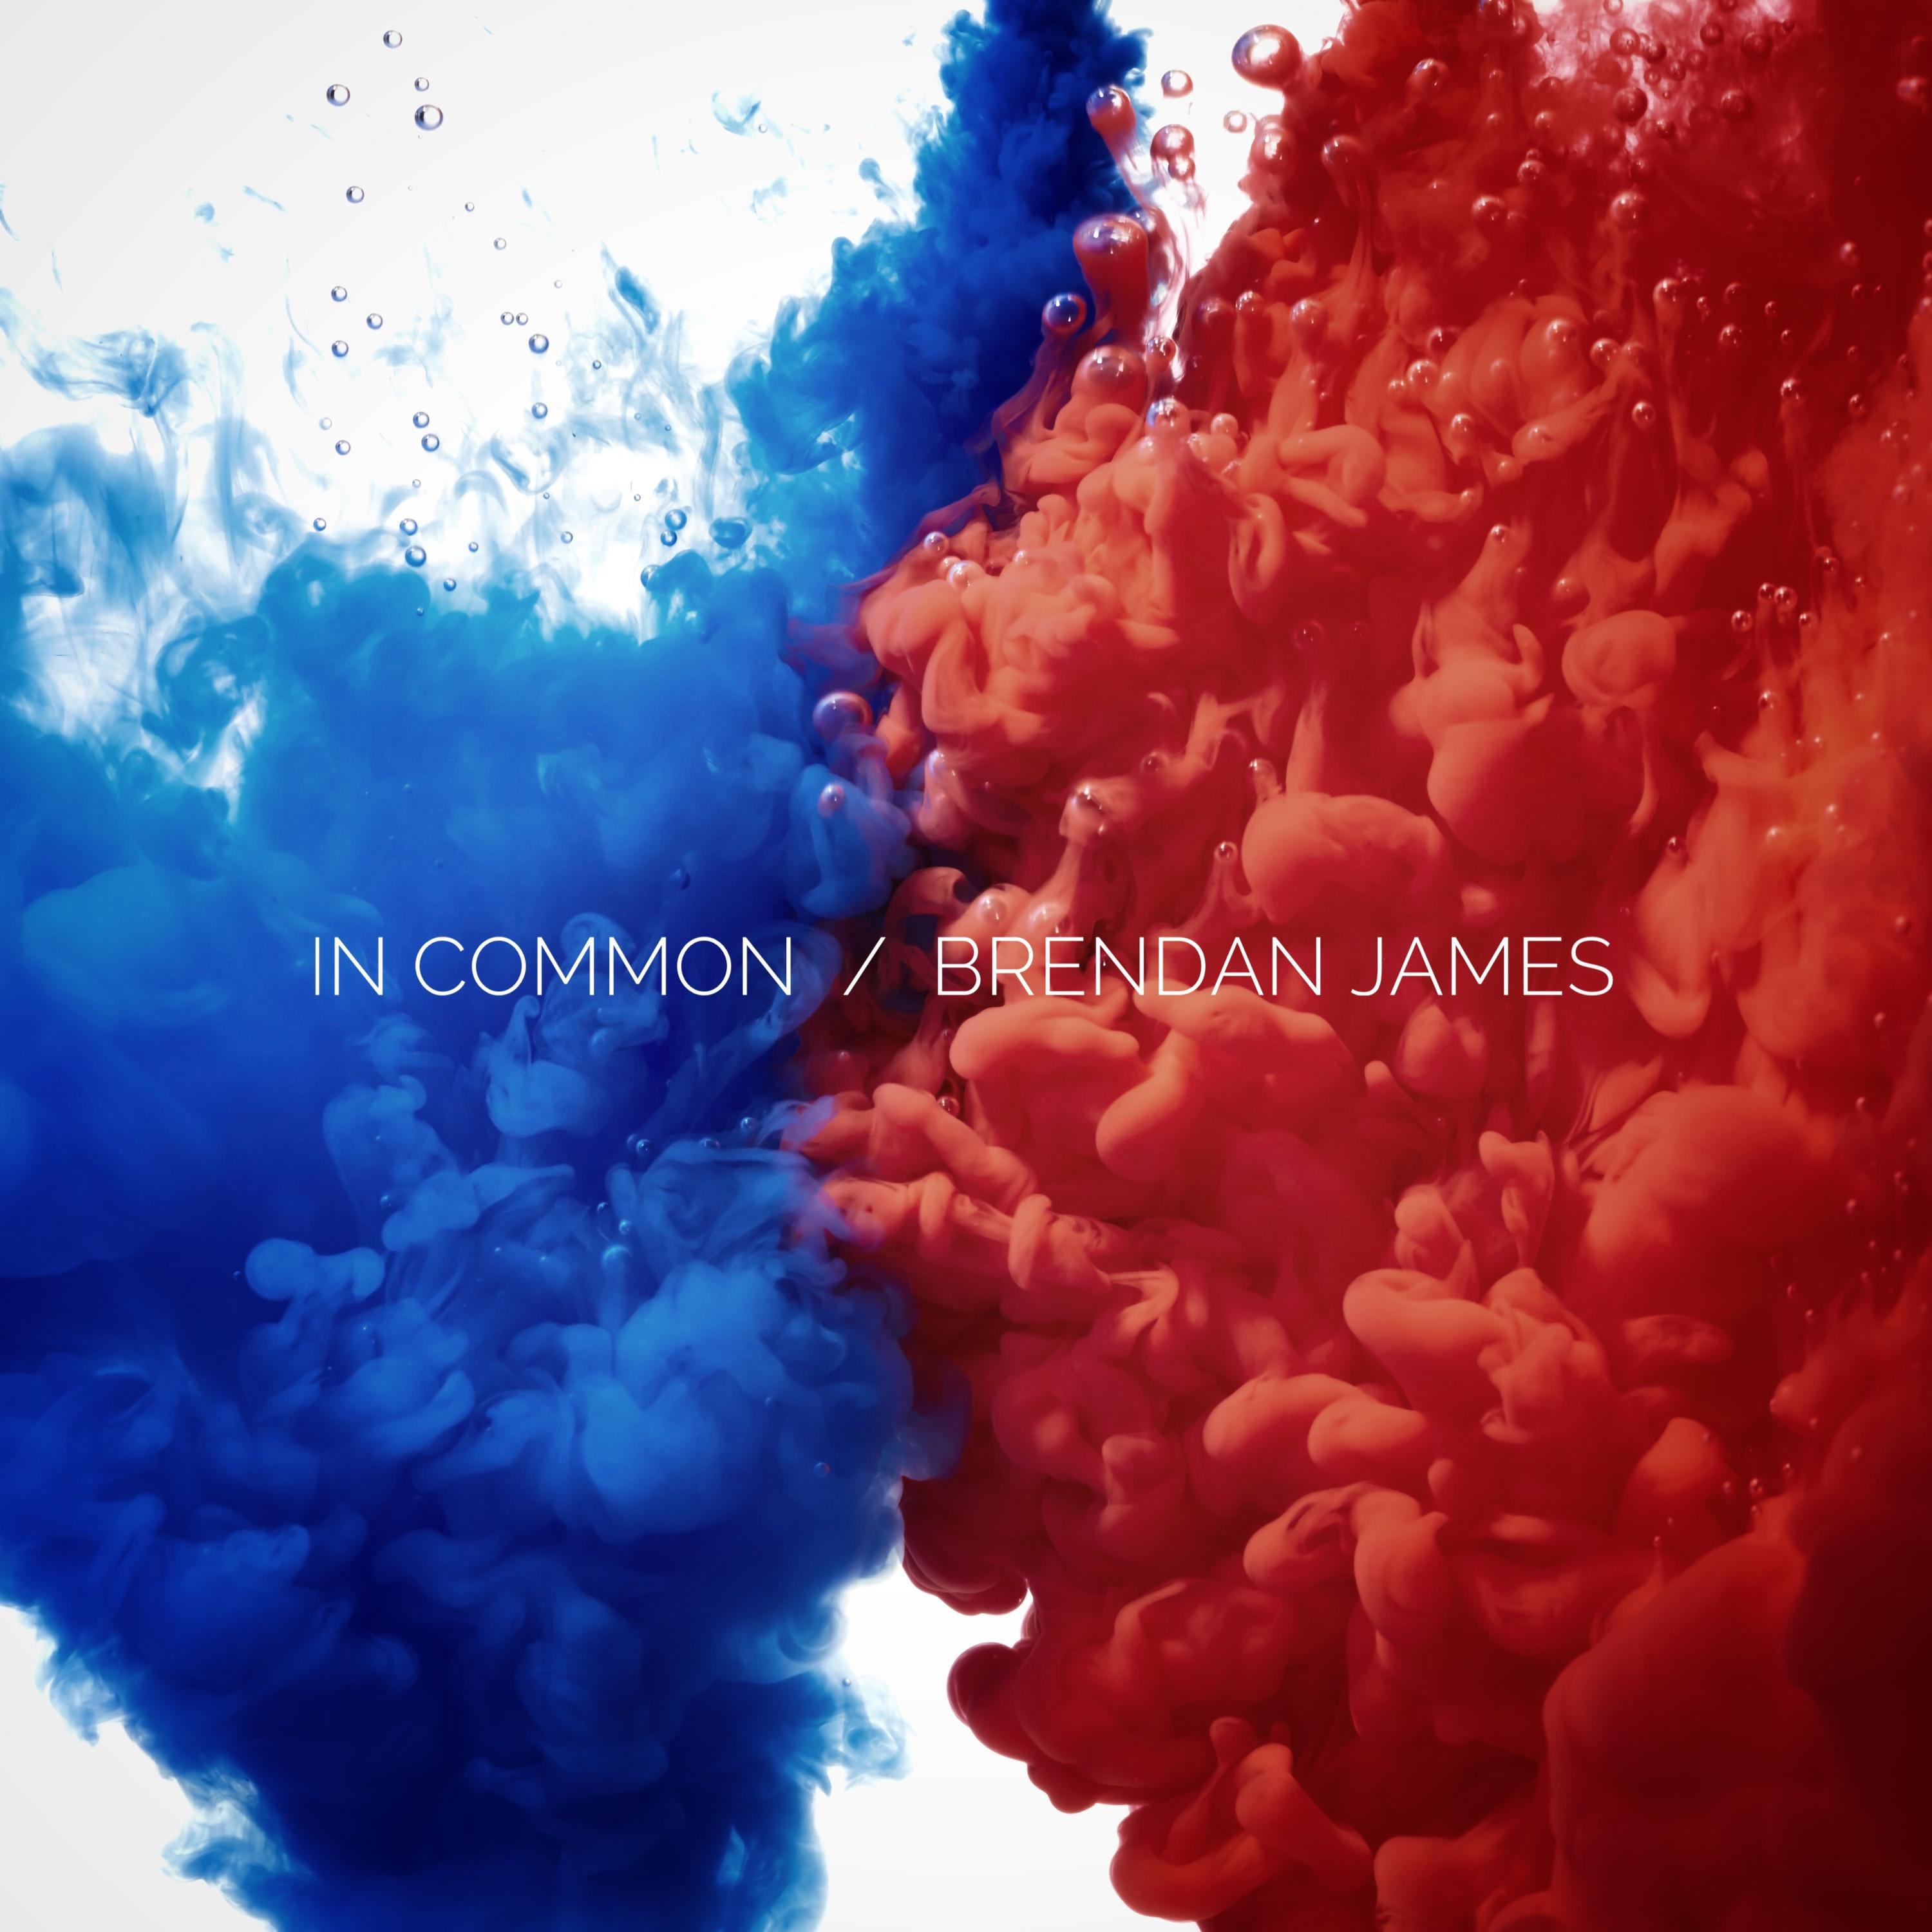 Brendan James - In Common